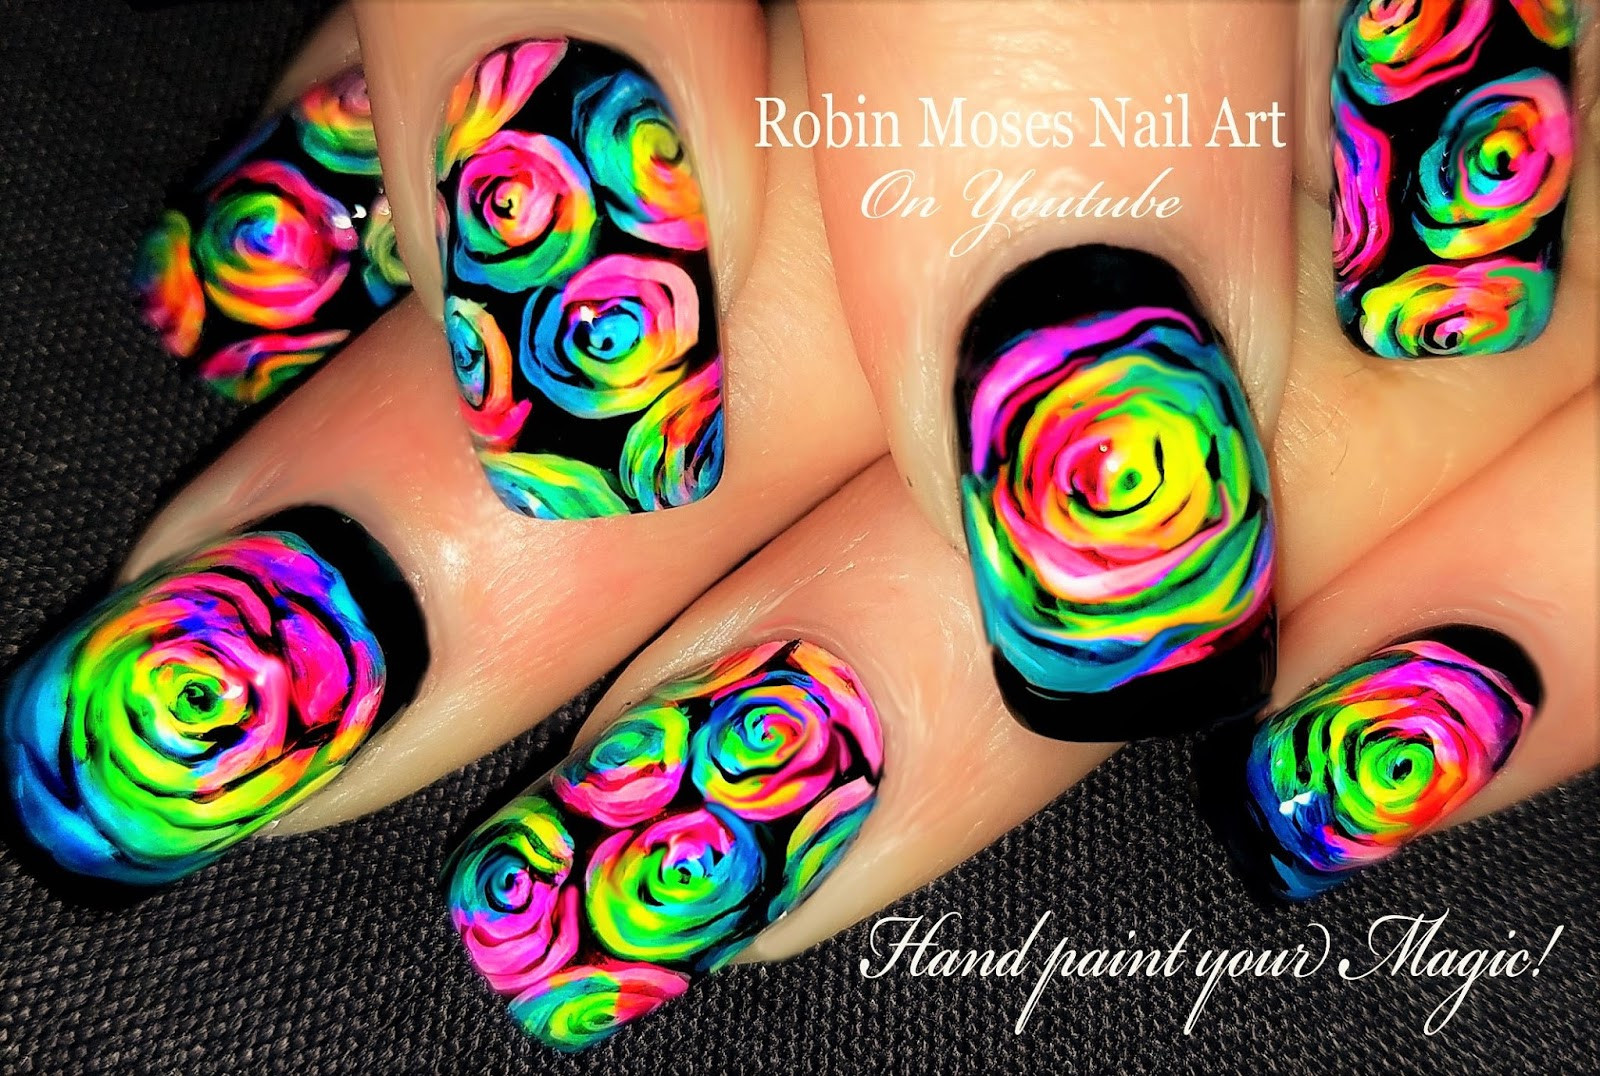 Robin Moses Nail Art Brushes - Amazon.com - wide 8